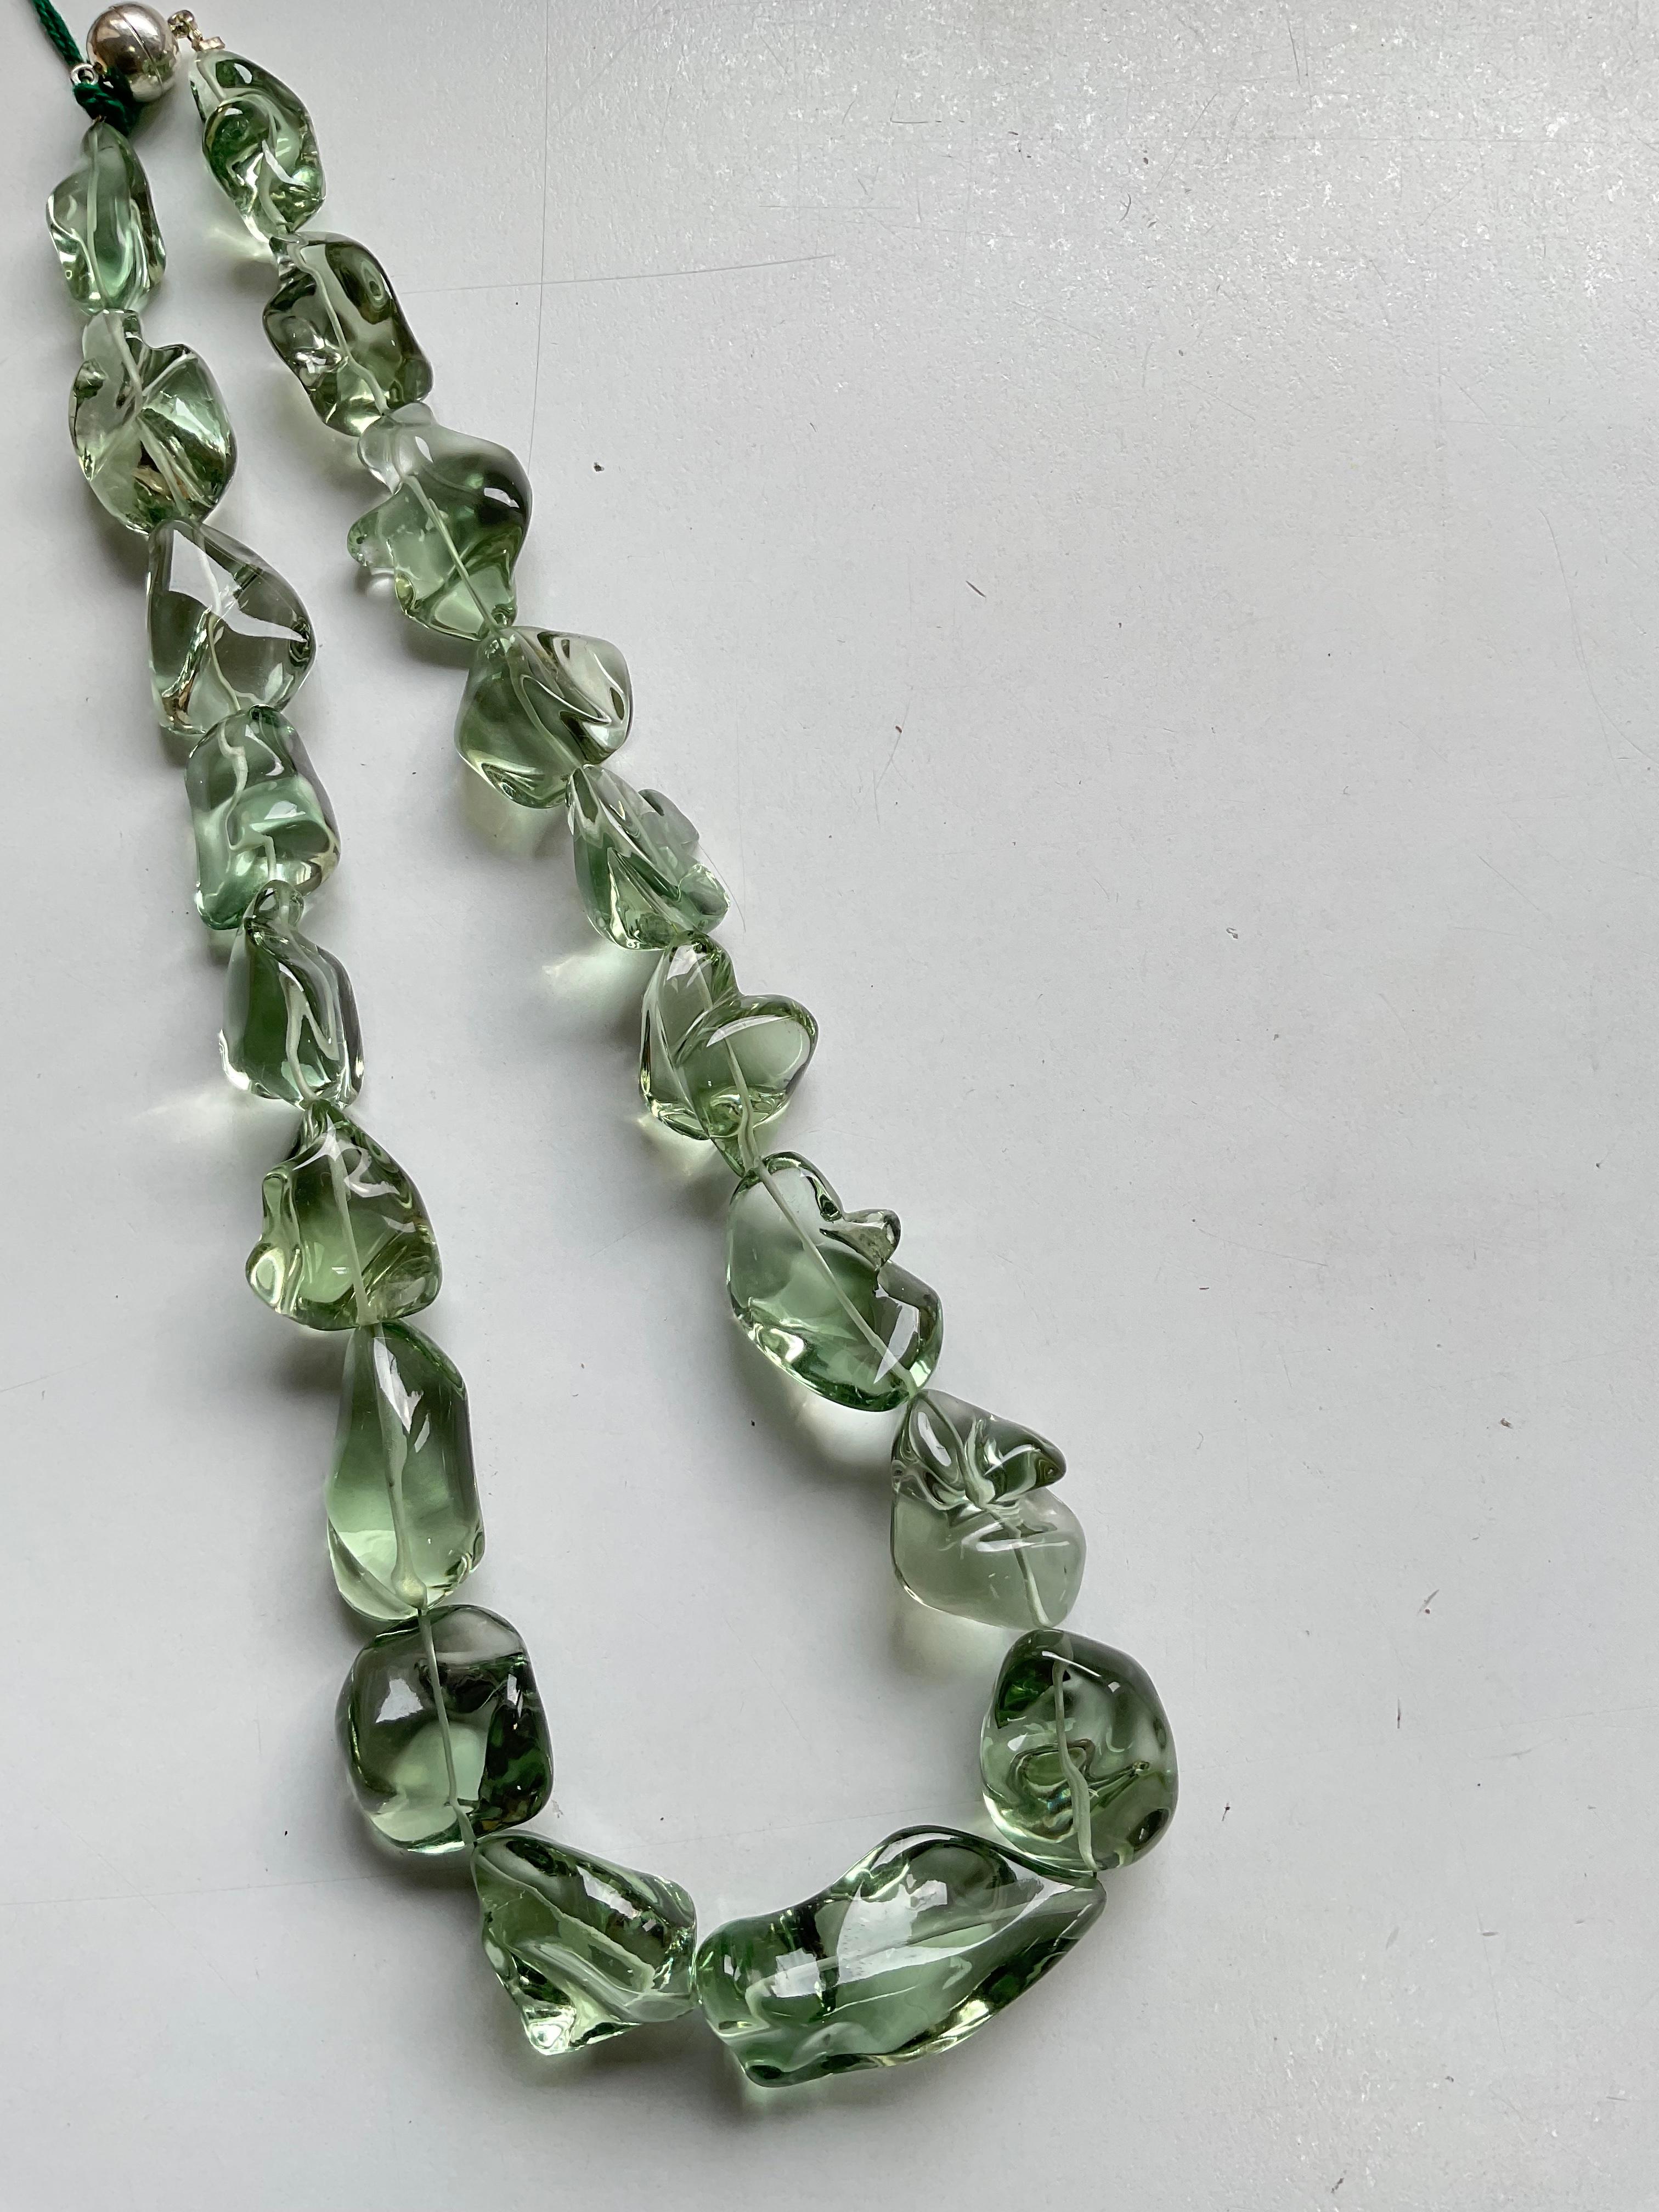 Tumbled Prasiolite Green Amethyst Quartz Beaded Jewelry Necklace Gem Quality For Sale